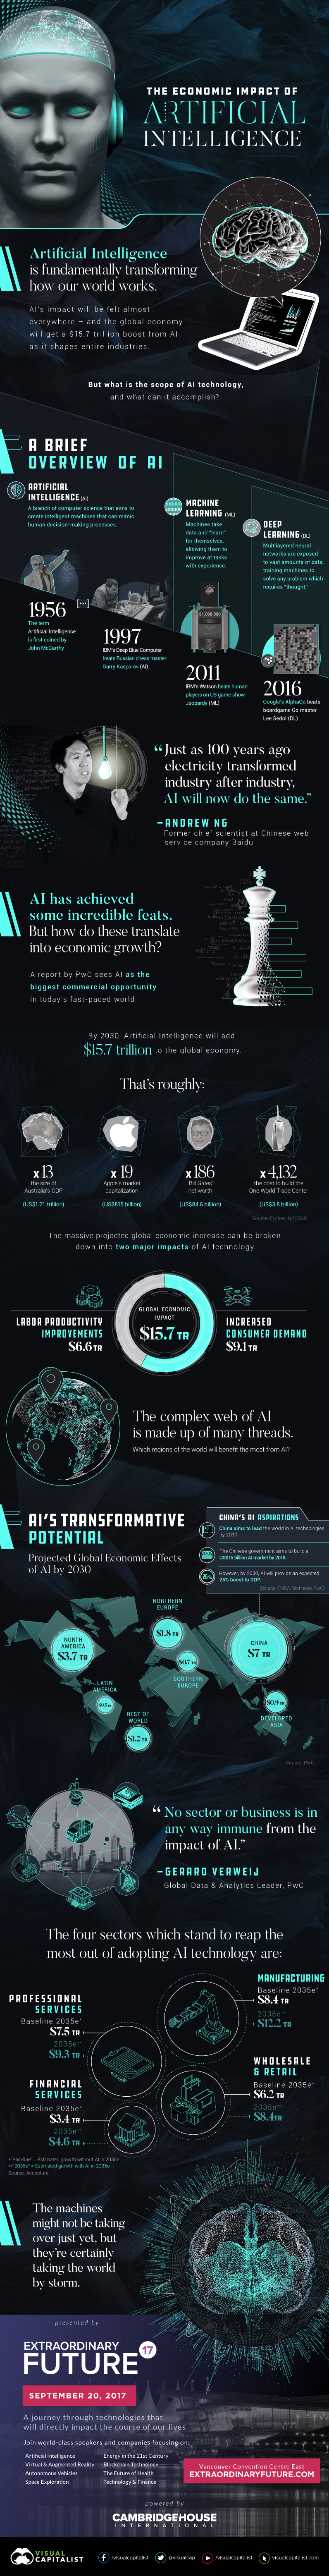 Visualizing the Massive $15.7 Trillion Impact of AI